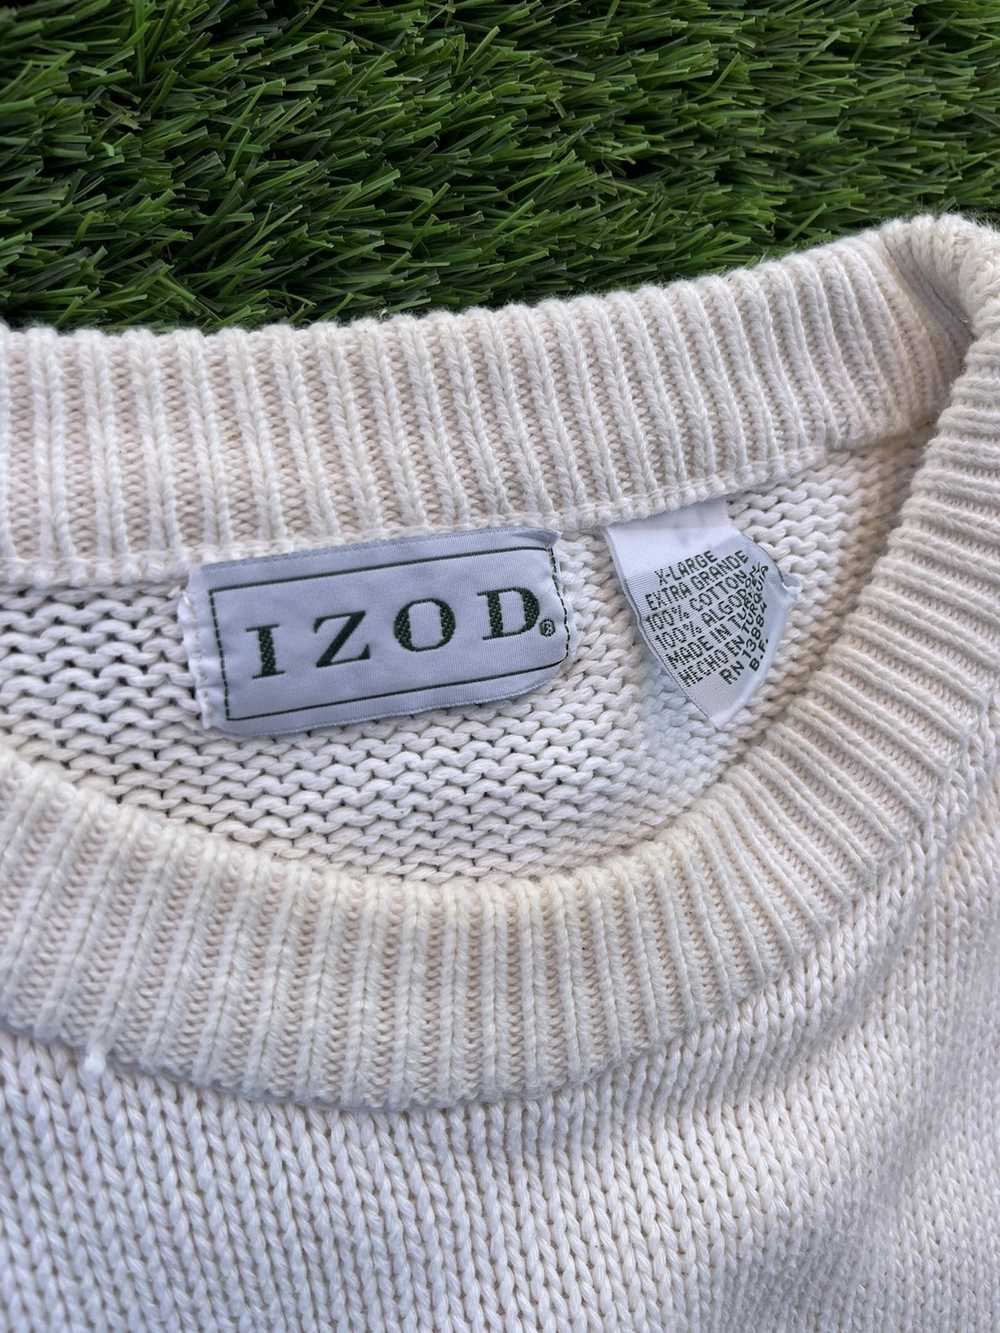 Izod Vintage IZOD Golf Knitted Sweater - image 3